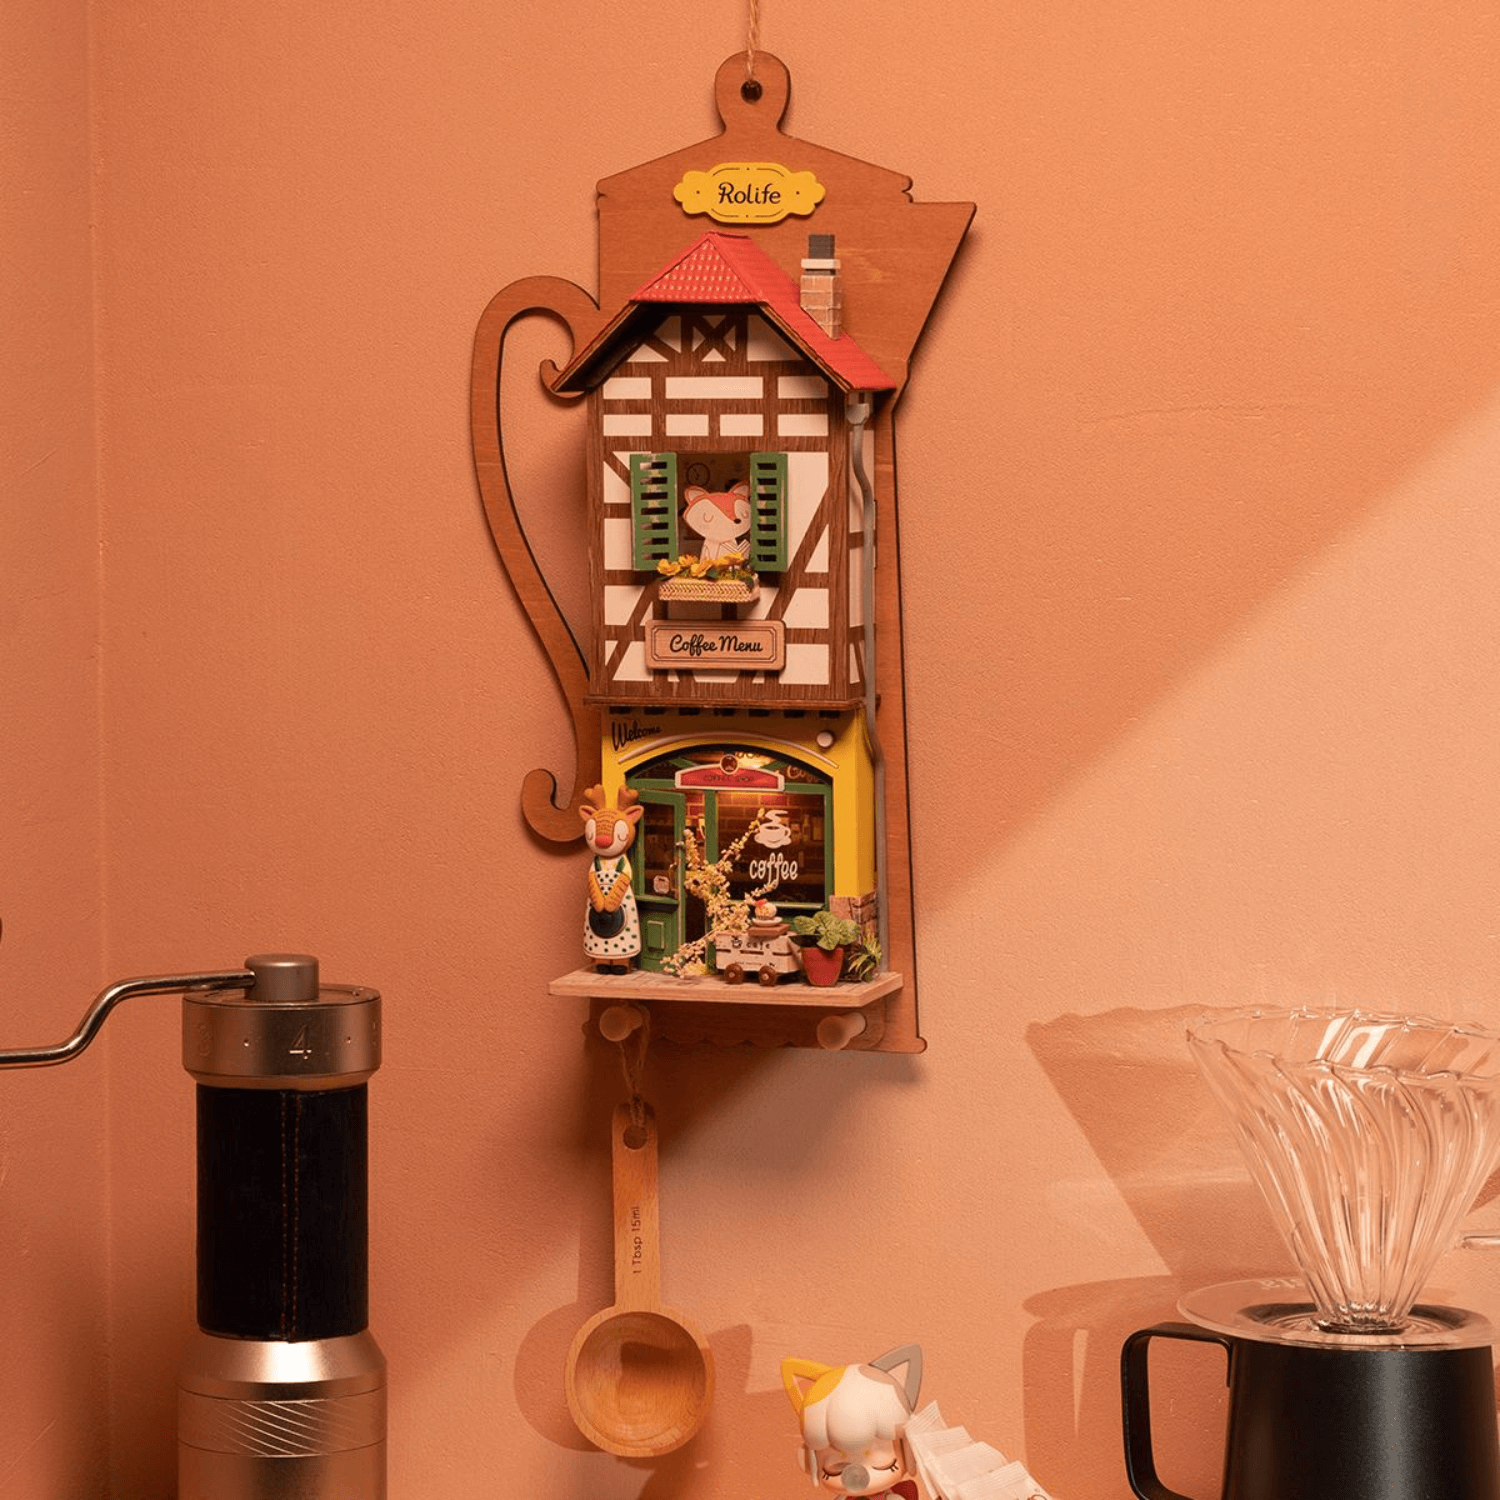 Maison miniature - Café - Rolife